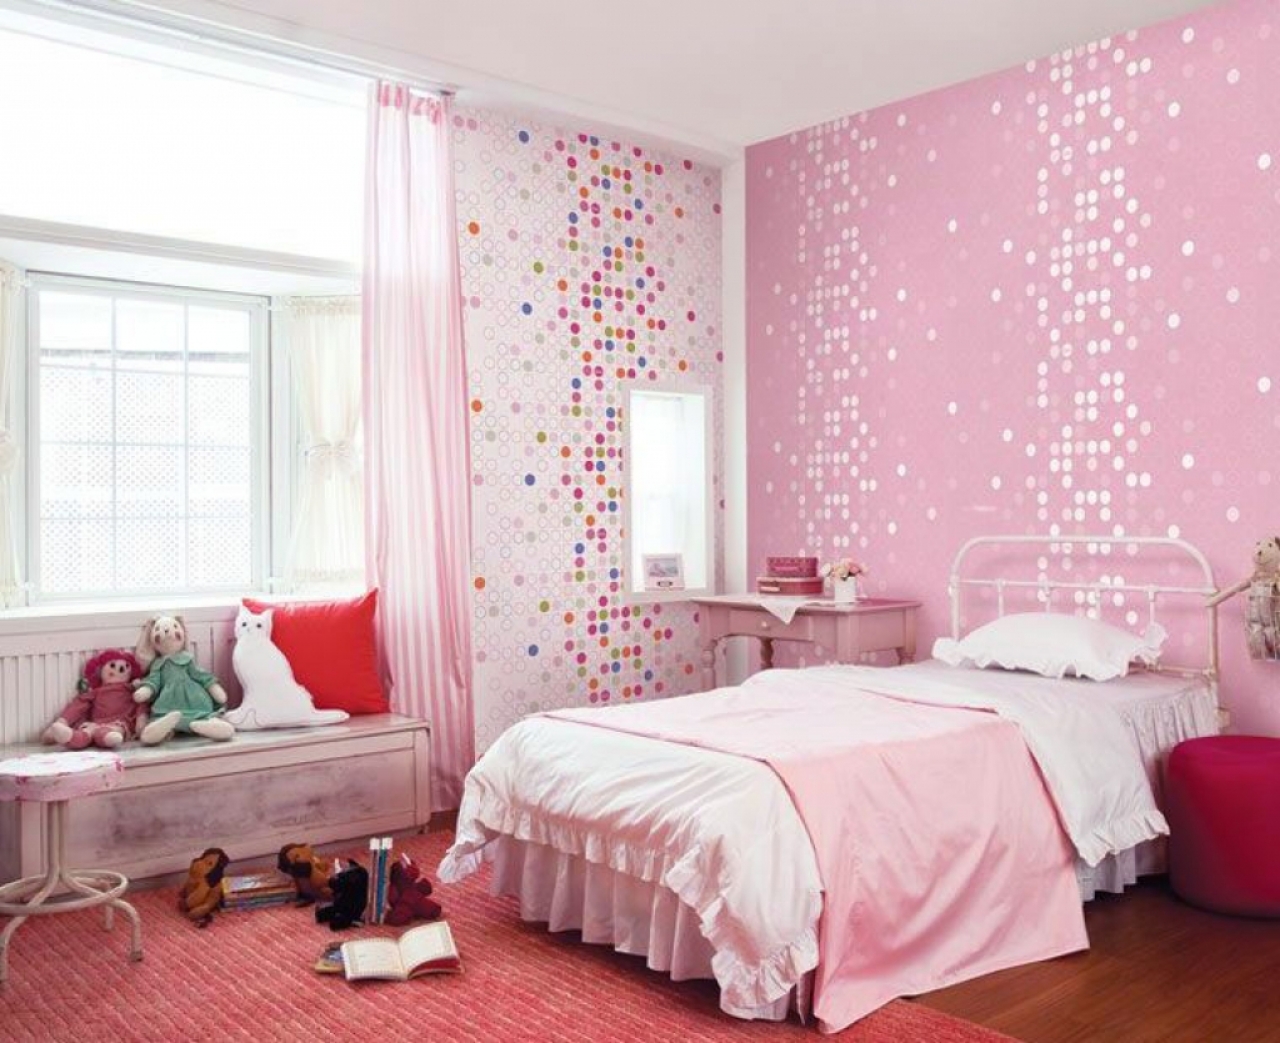 Kids Room Cute Pink Dotty Wallpaper Girls Bedroom Home Design Jpg